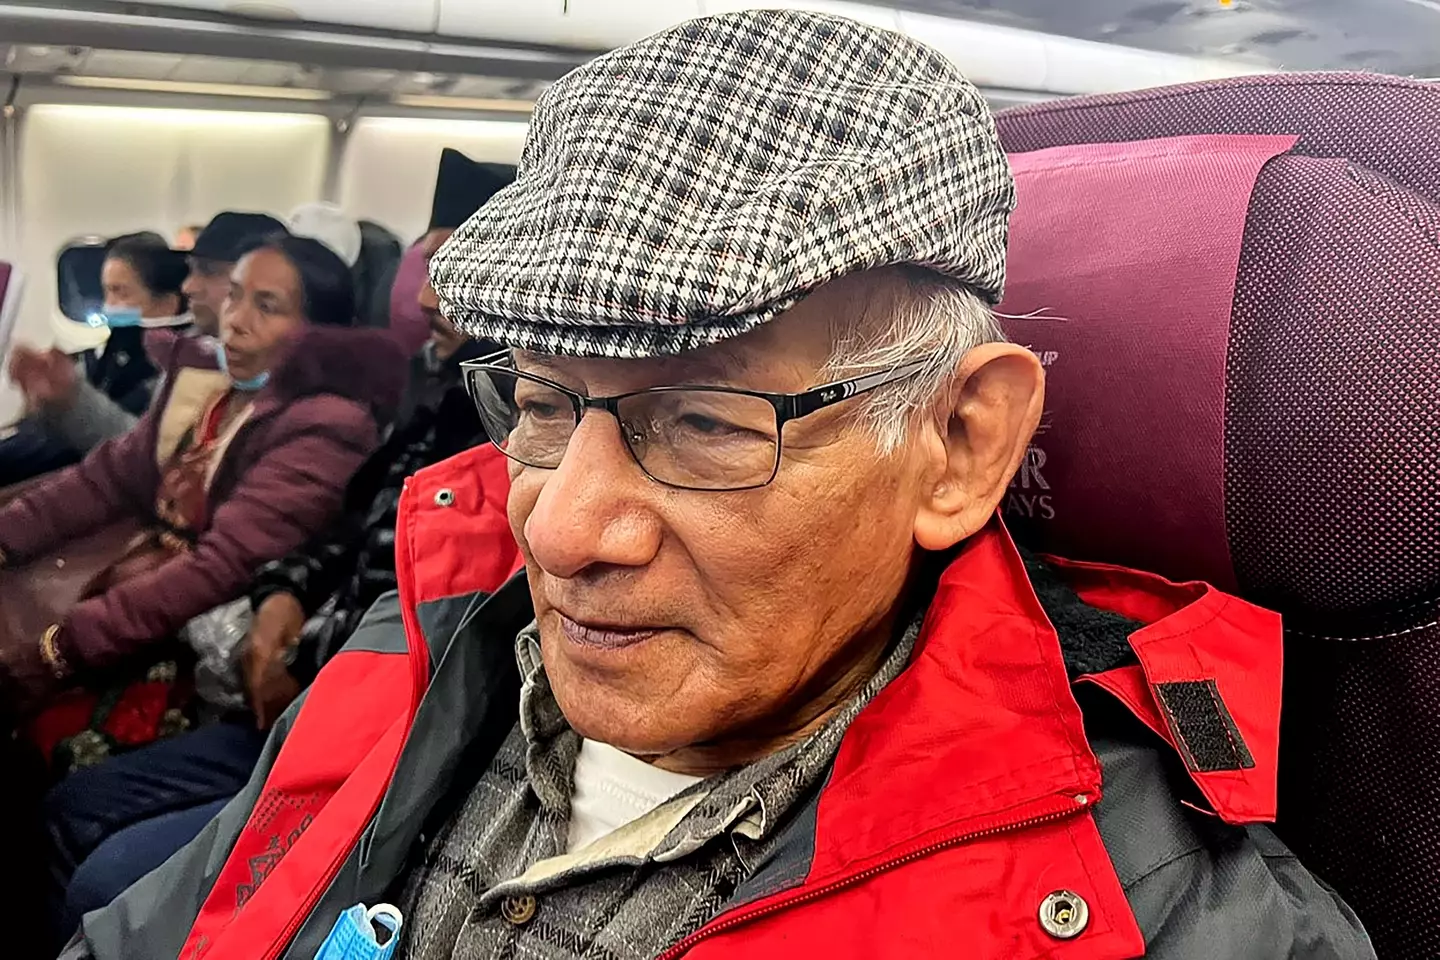 Now 79, Sobhraj is sightseeing in London.